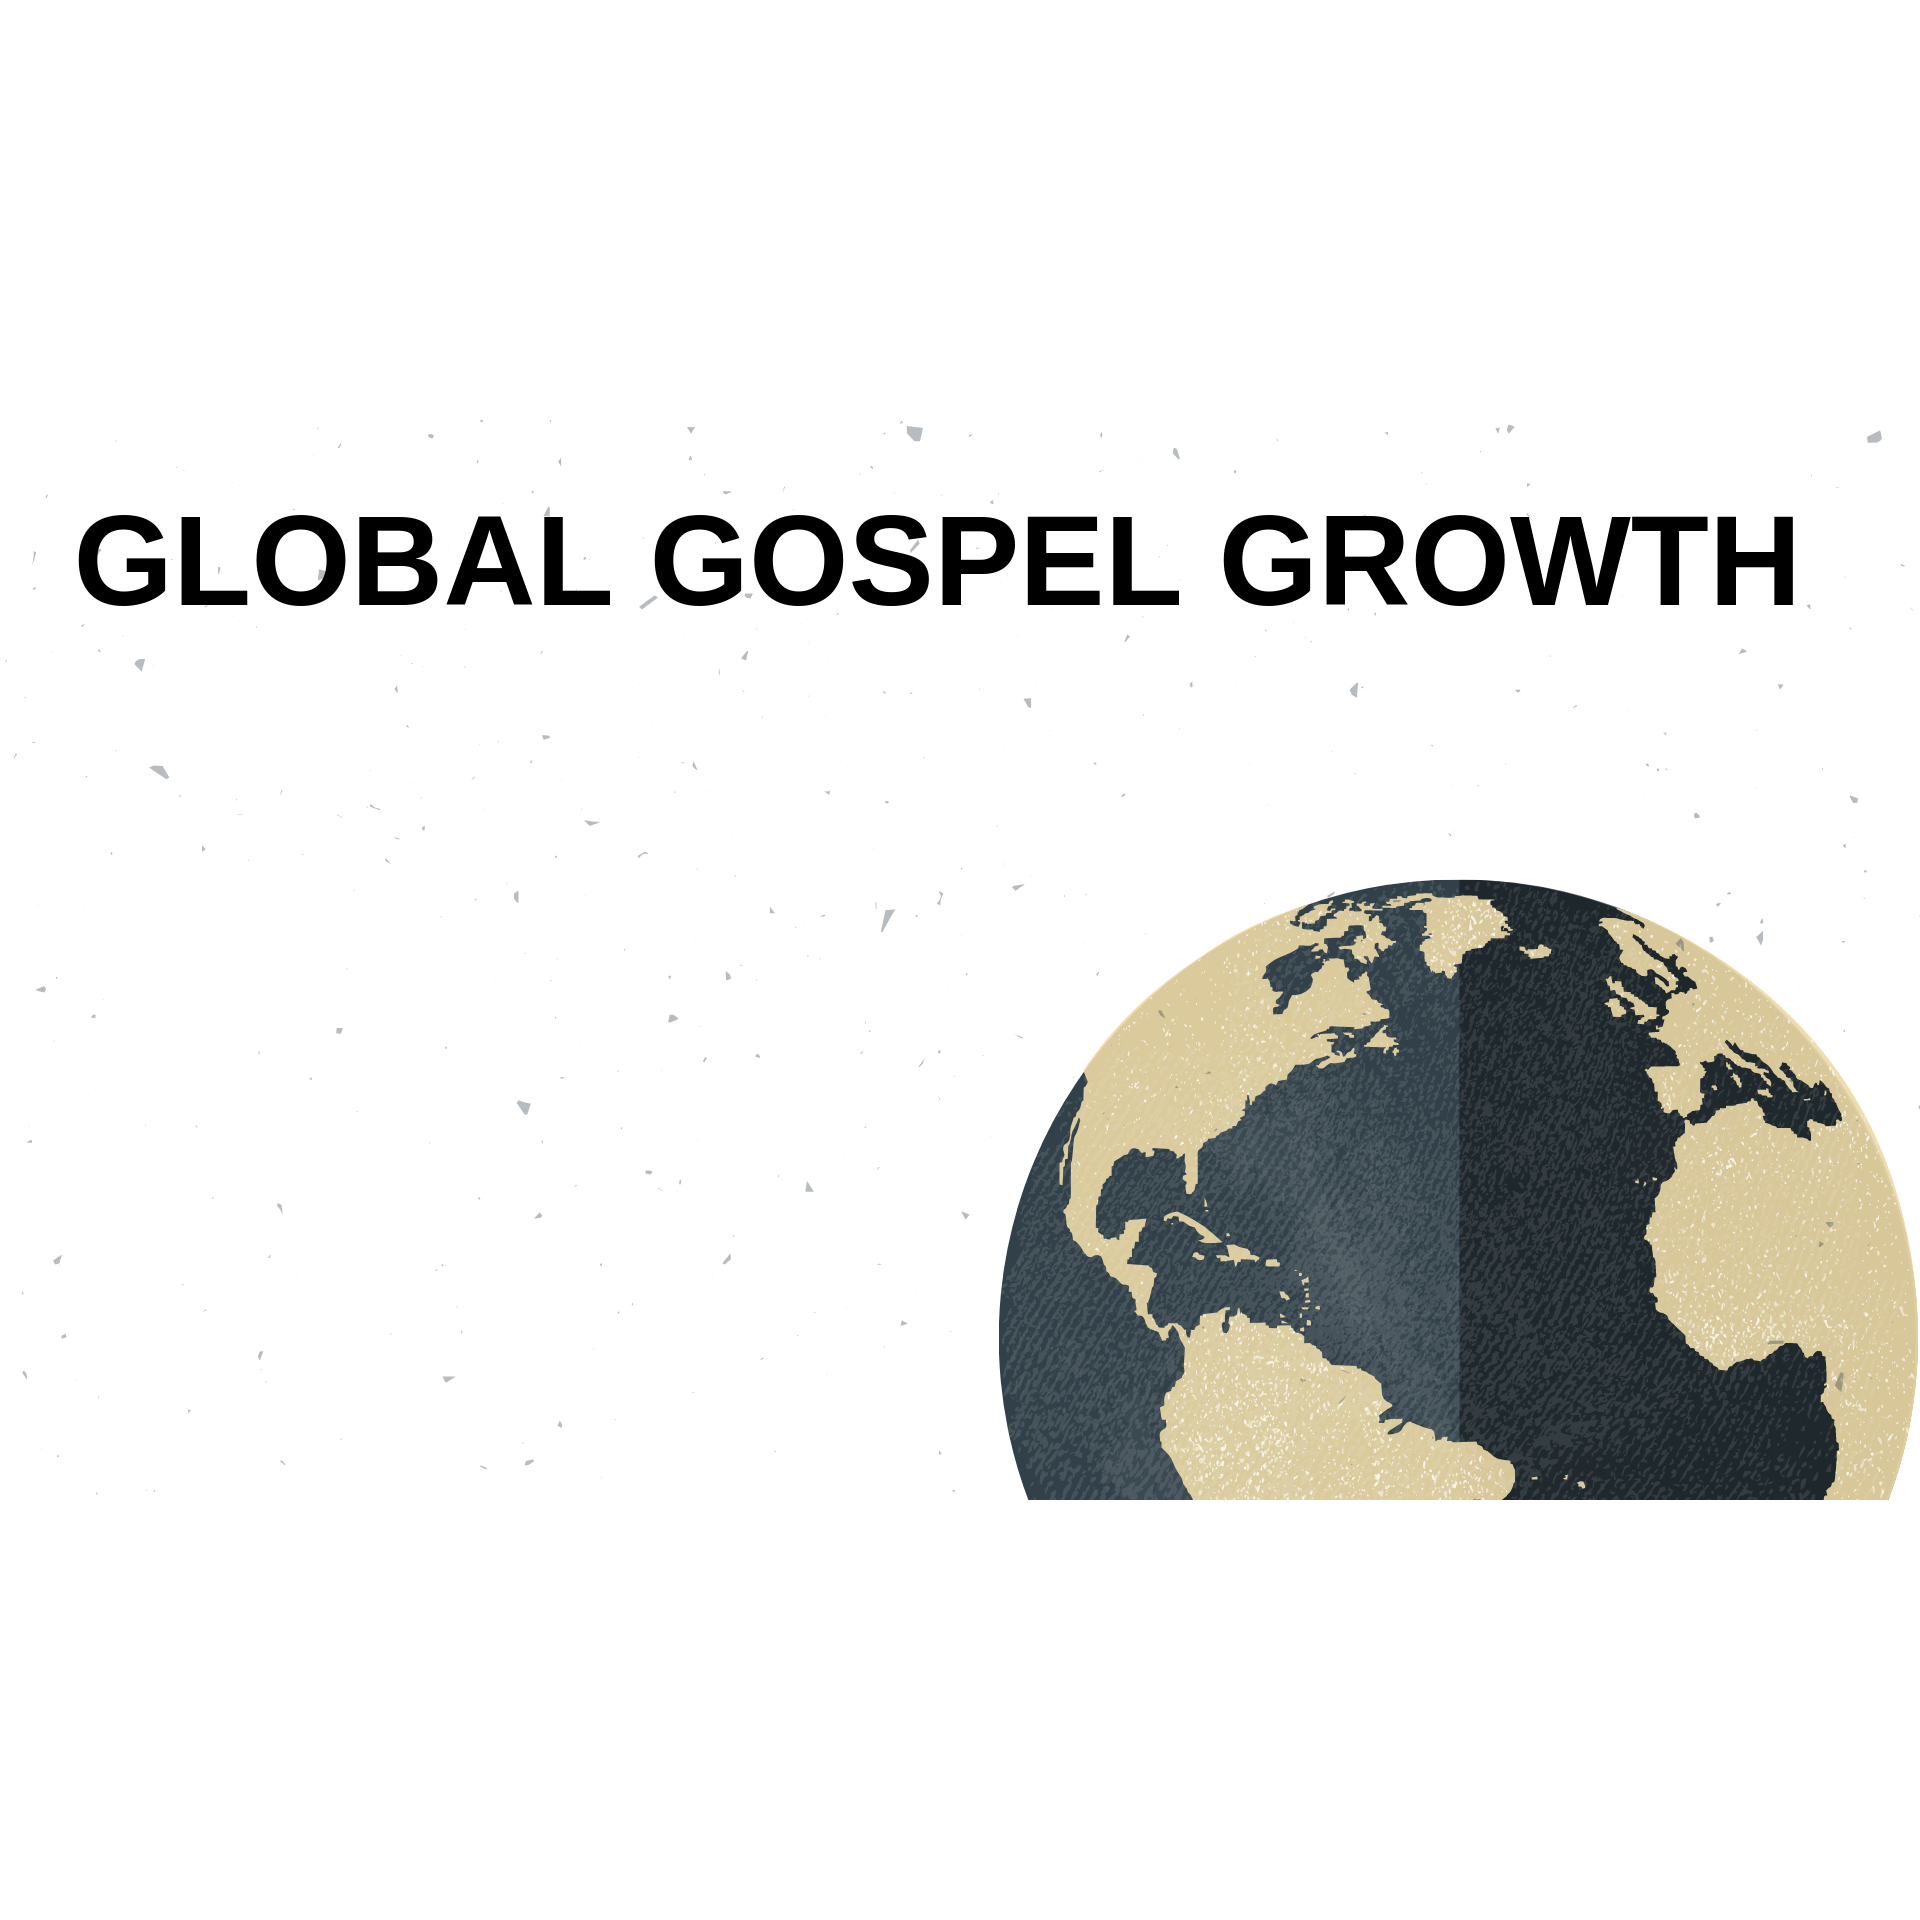 Paul’s Strategy for Global Gospel Growth